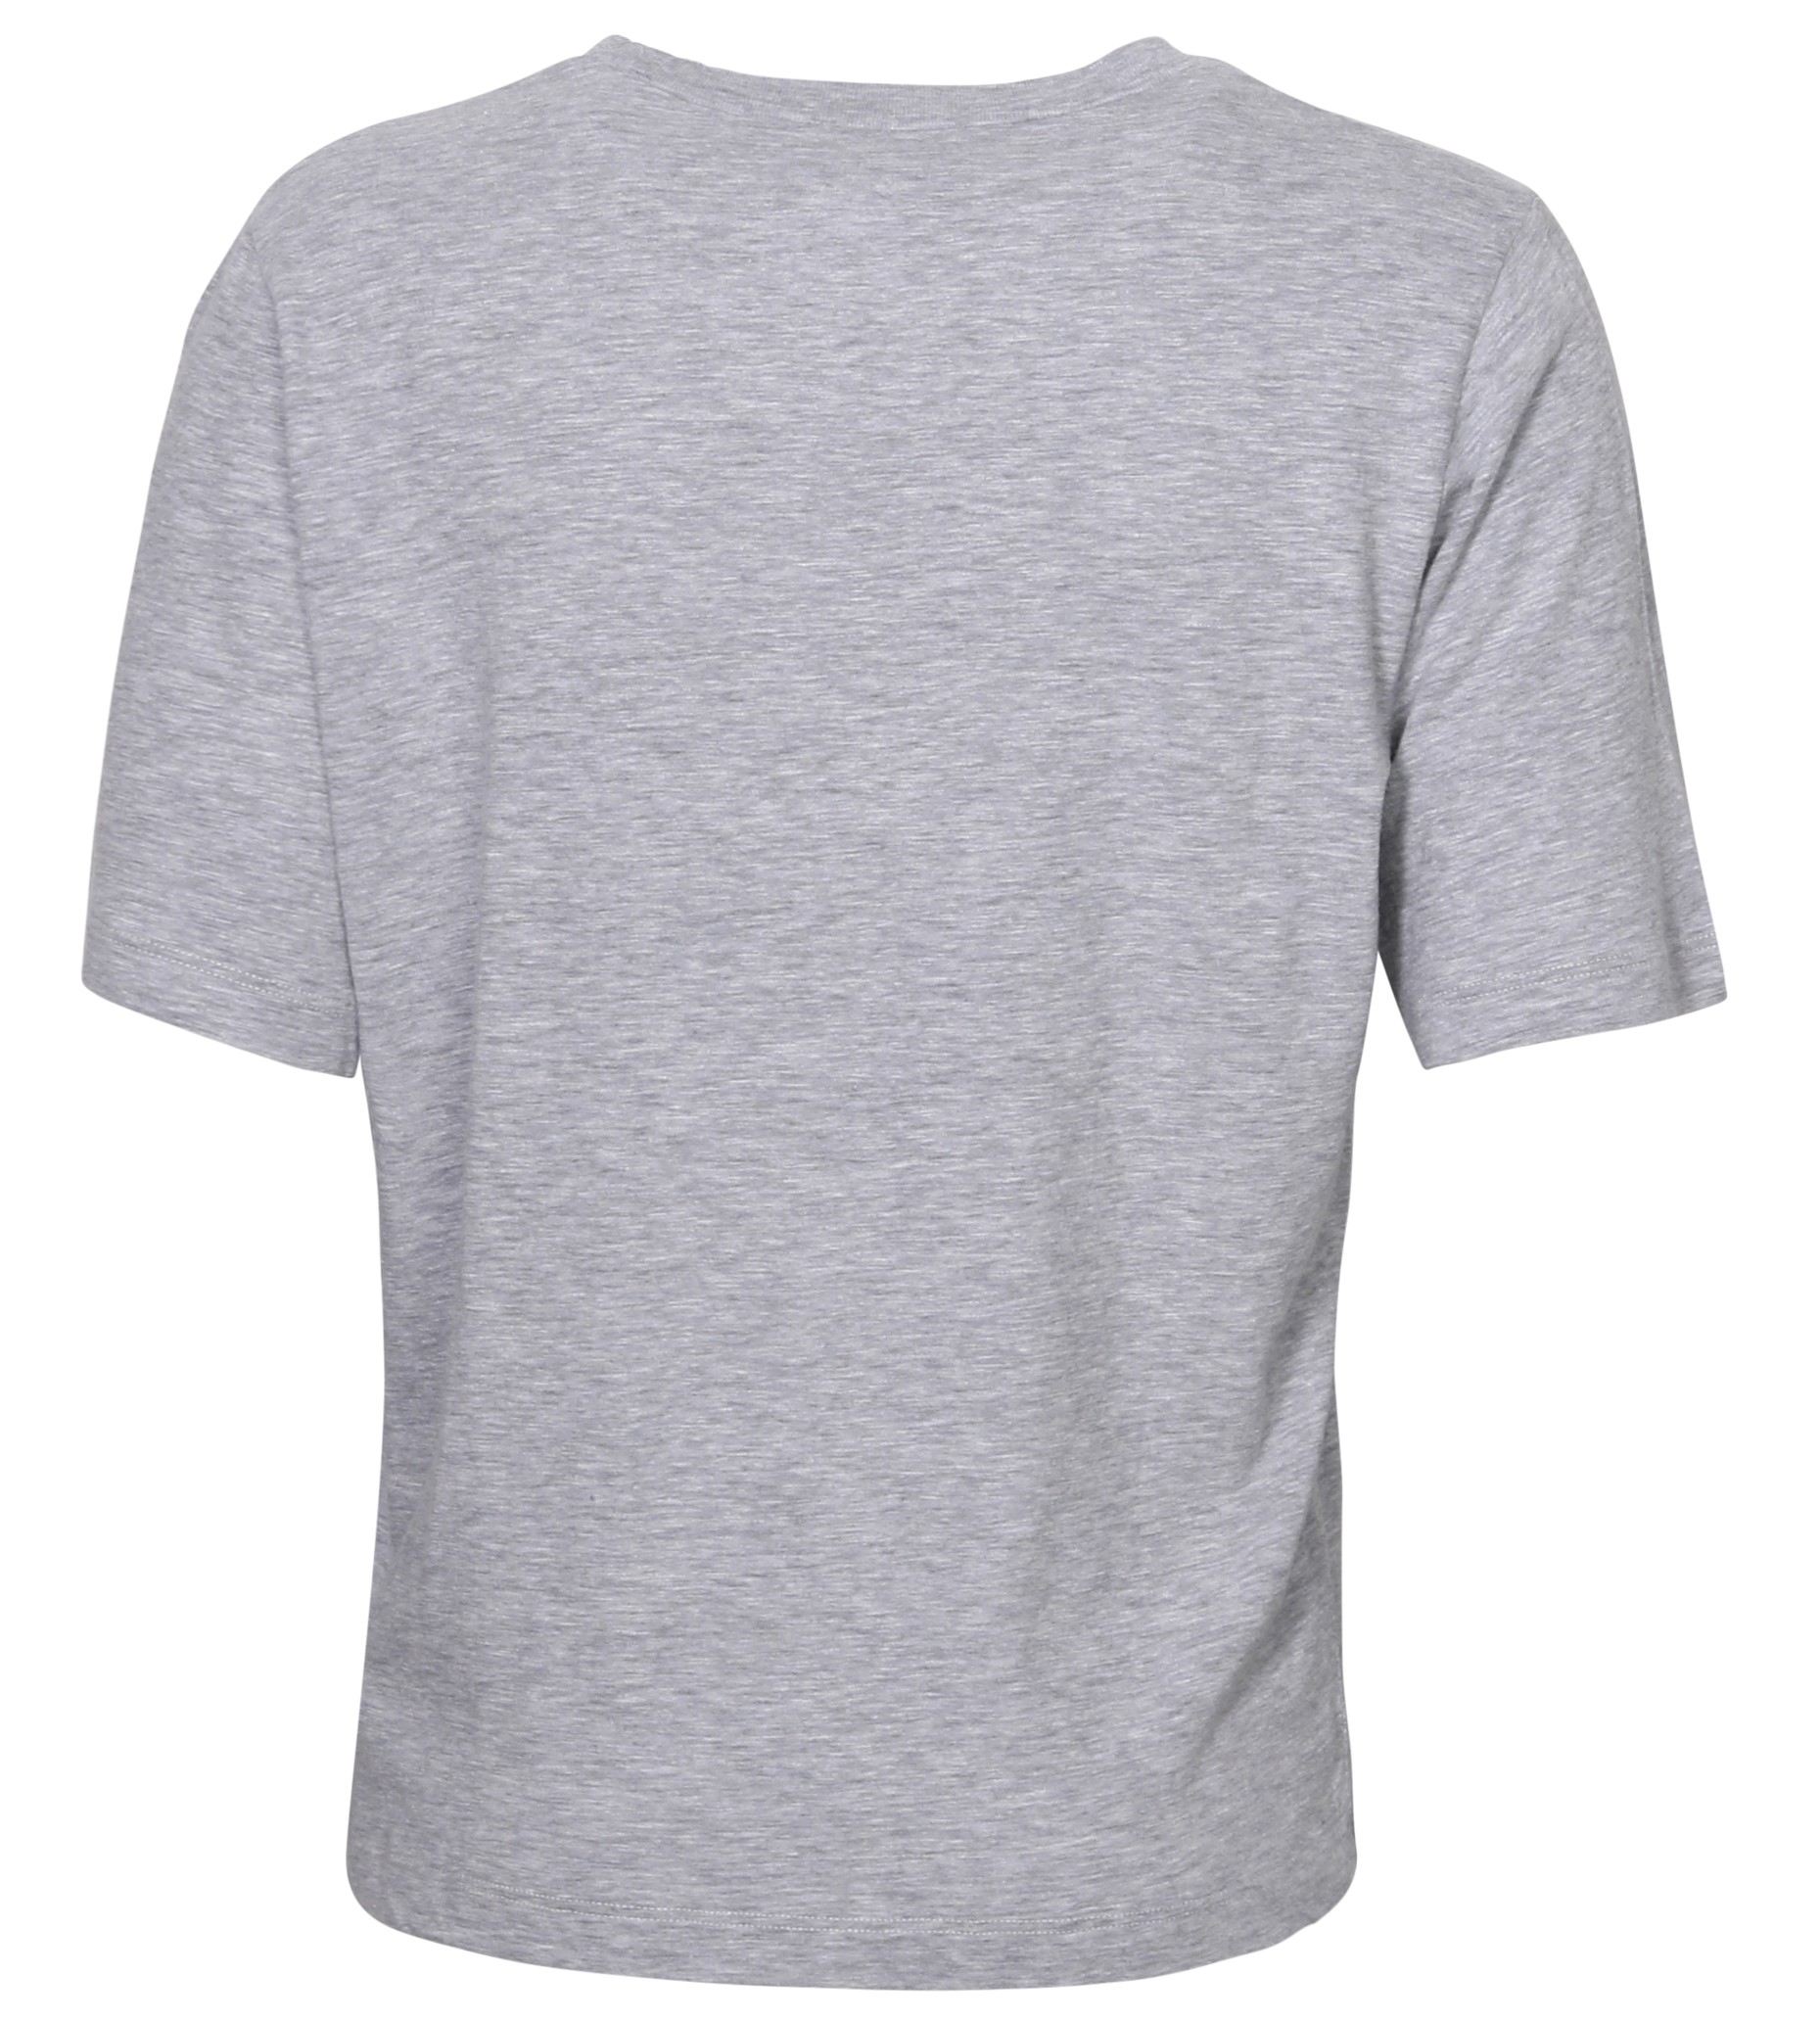 DSQUARED2 Easy Fit T-Shirt in Grey Melange